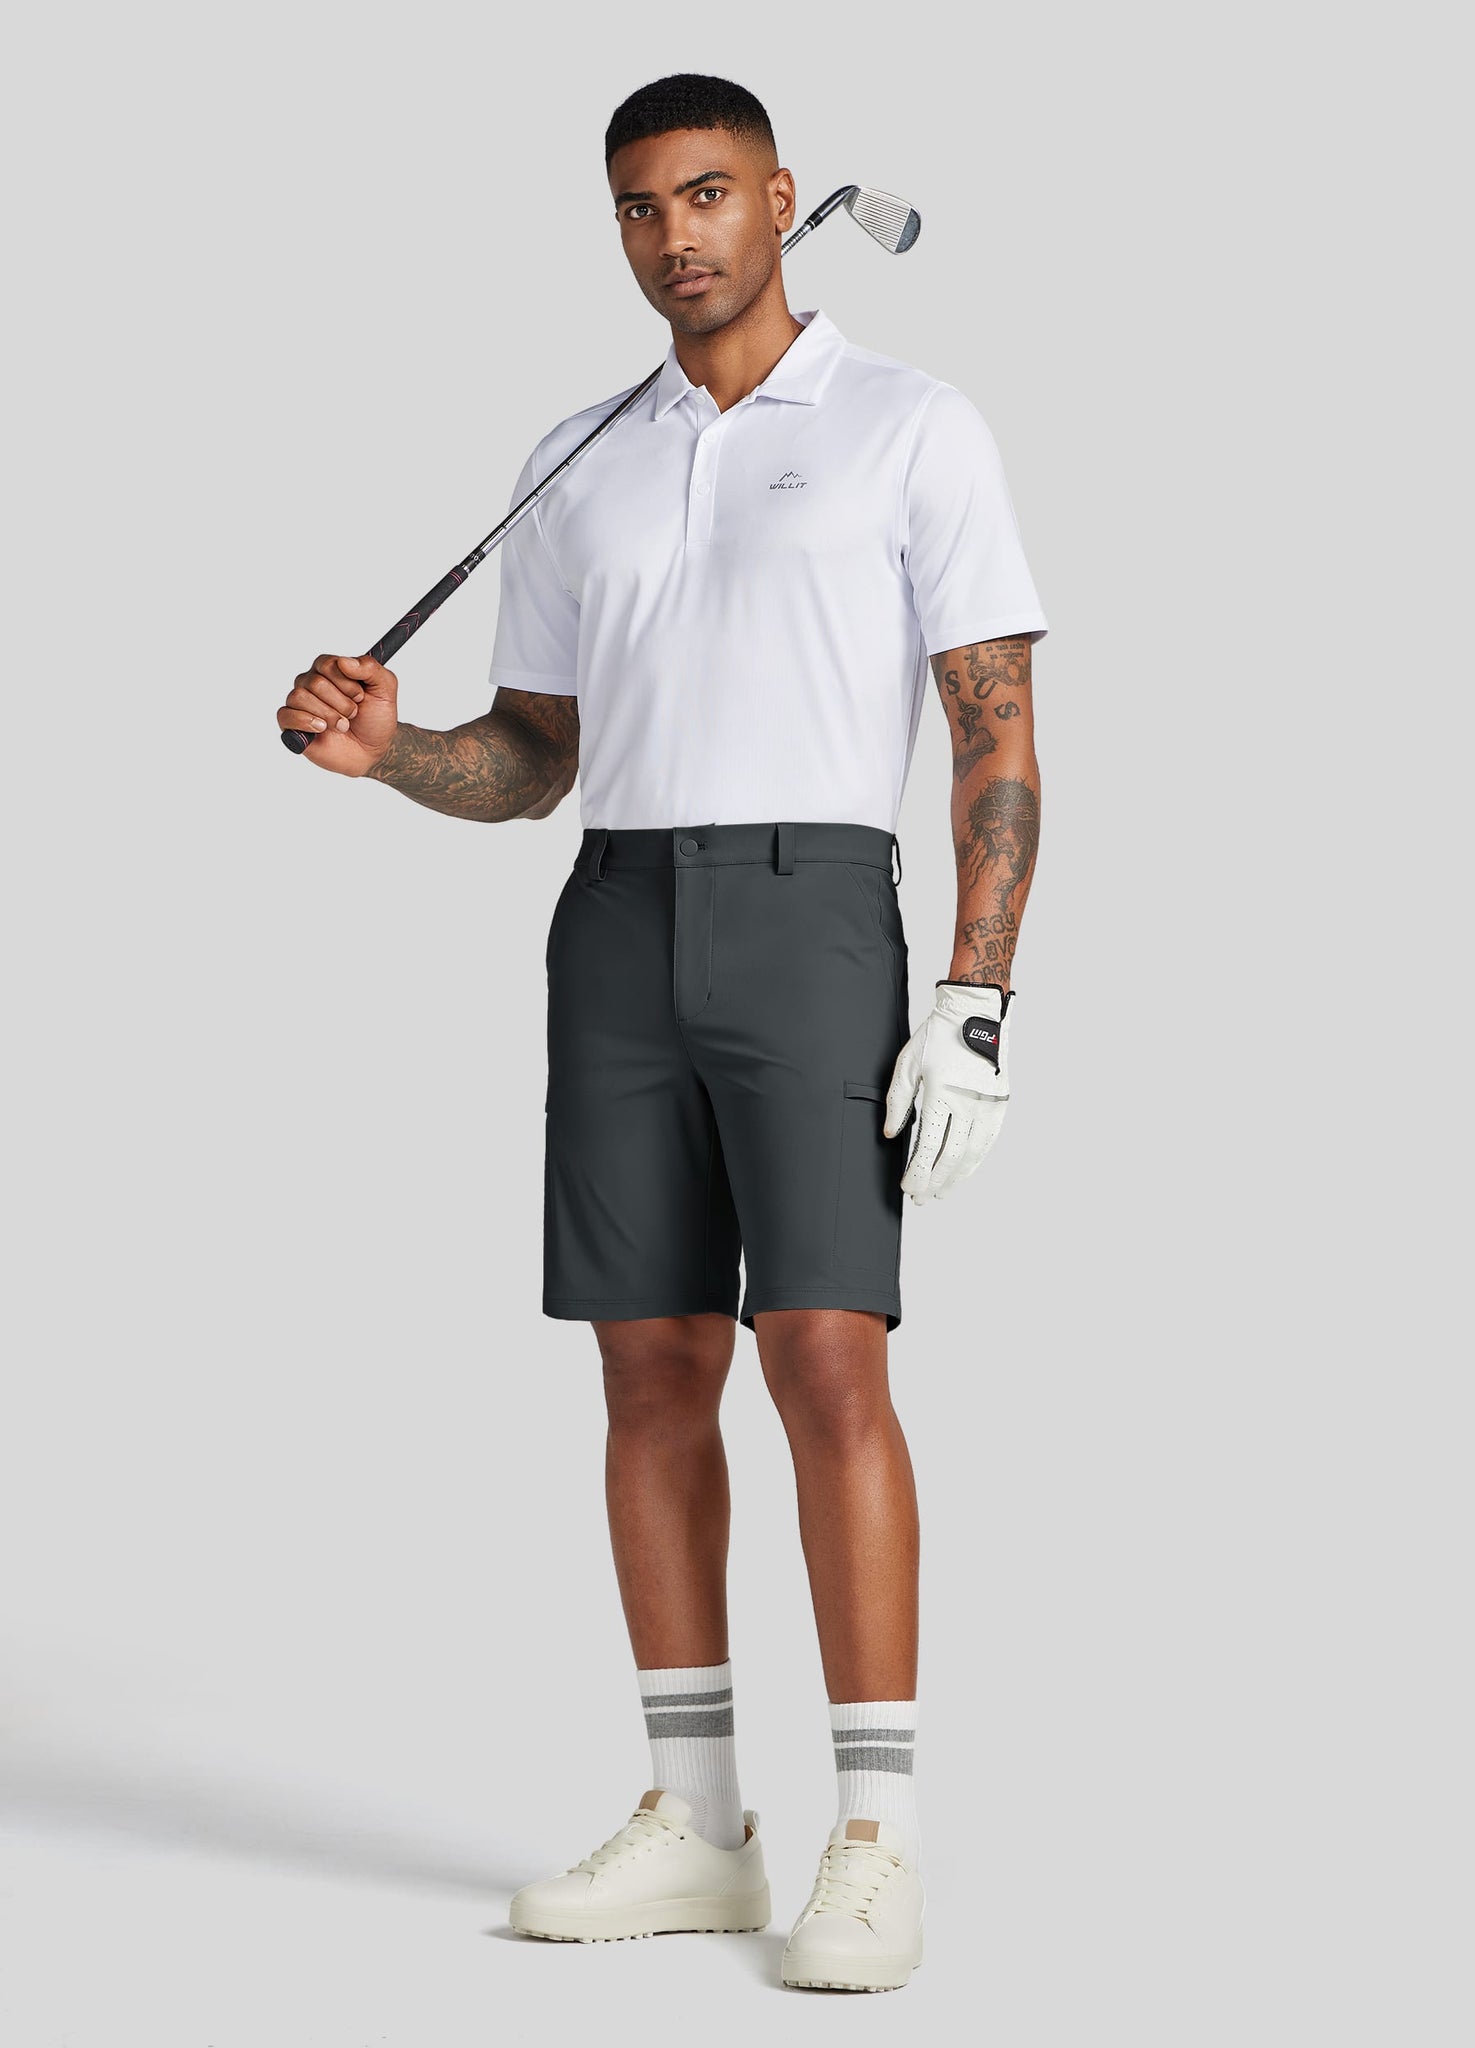 Men's Active Golf Shorts 9 Inseam